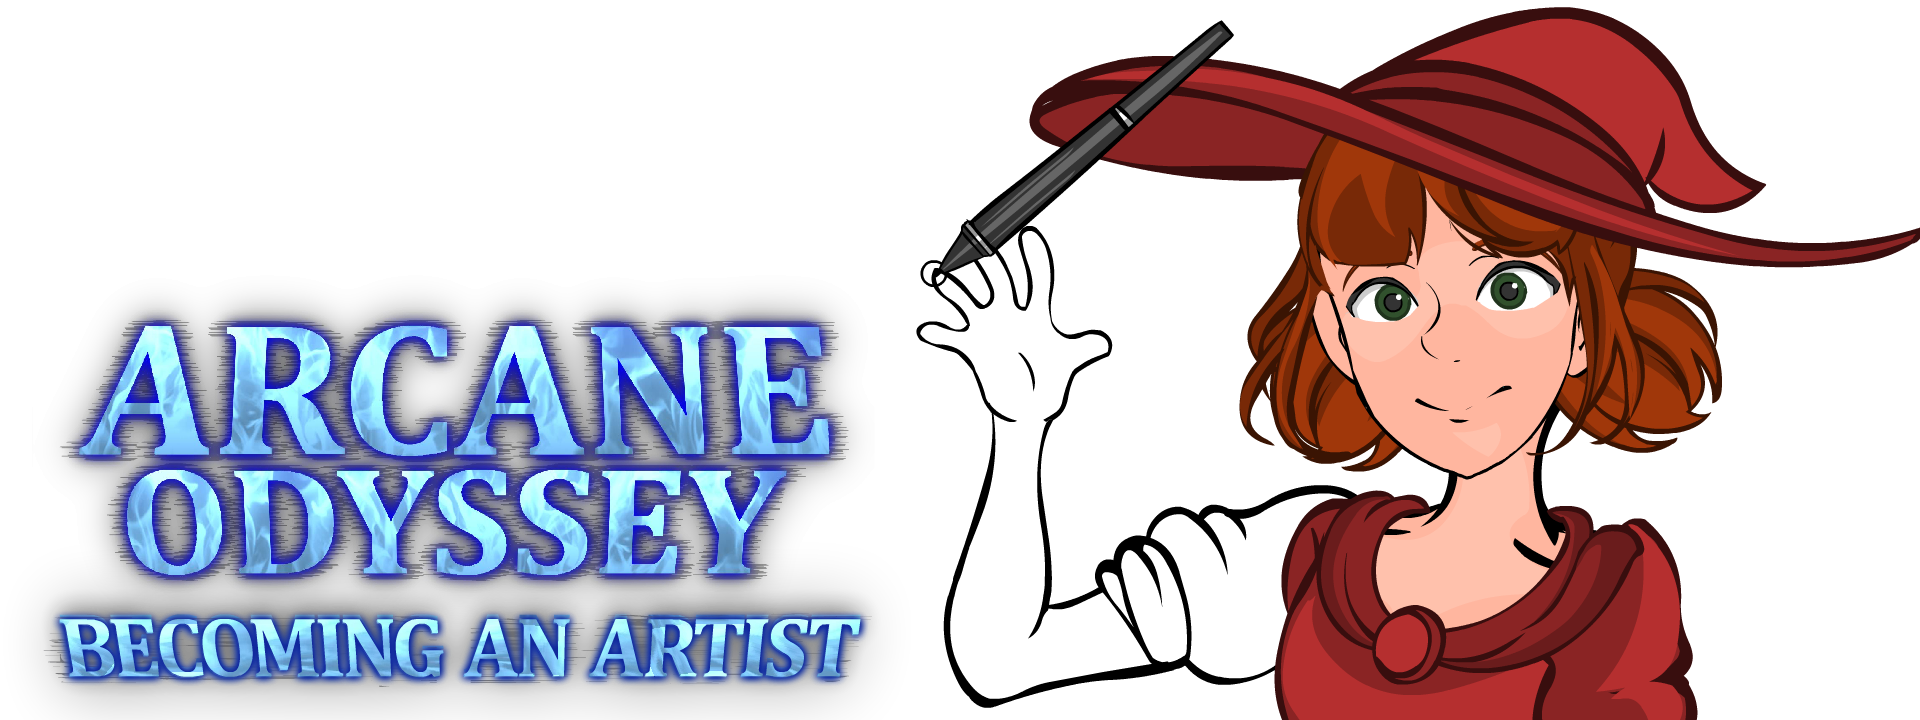 Arcane Odyssey - Artist Application Instructions - Art - Arcane Odyssey